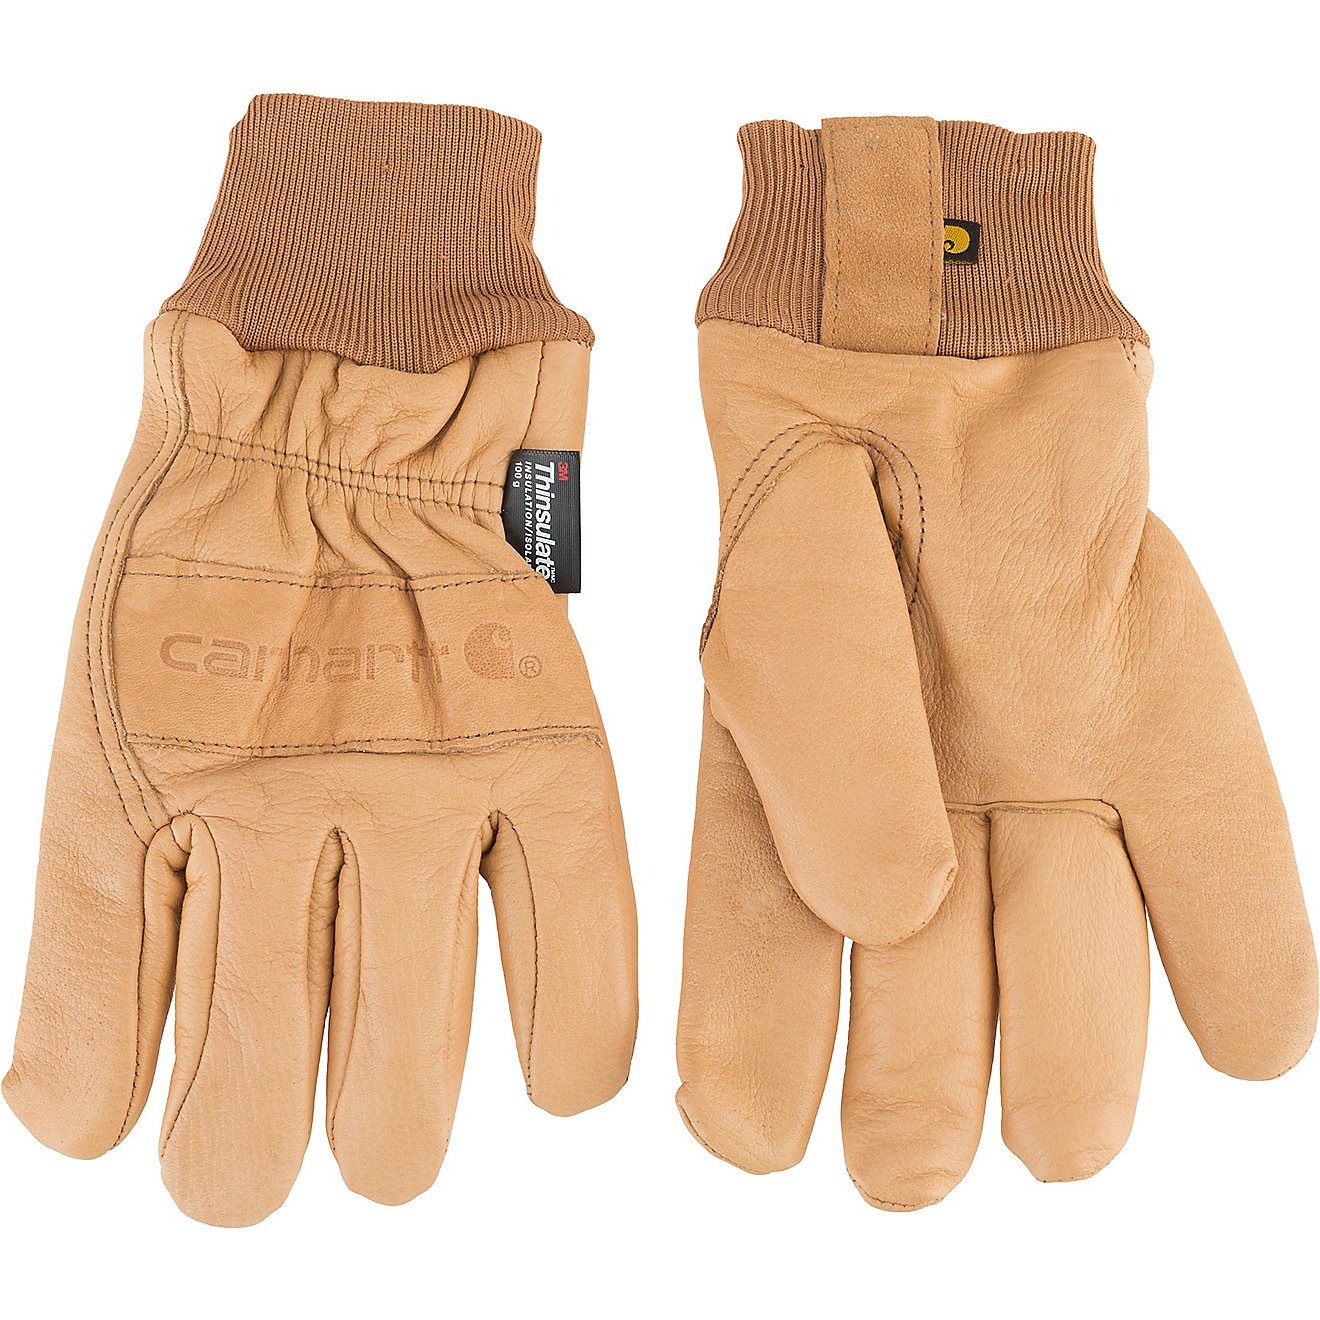 Carhartt Men's Insulated Leather Gunn Cut Gloves | Academy Sports + Outdoor Affiliate